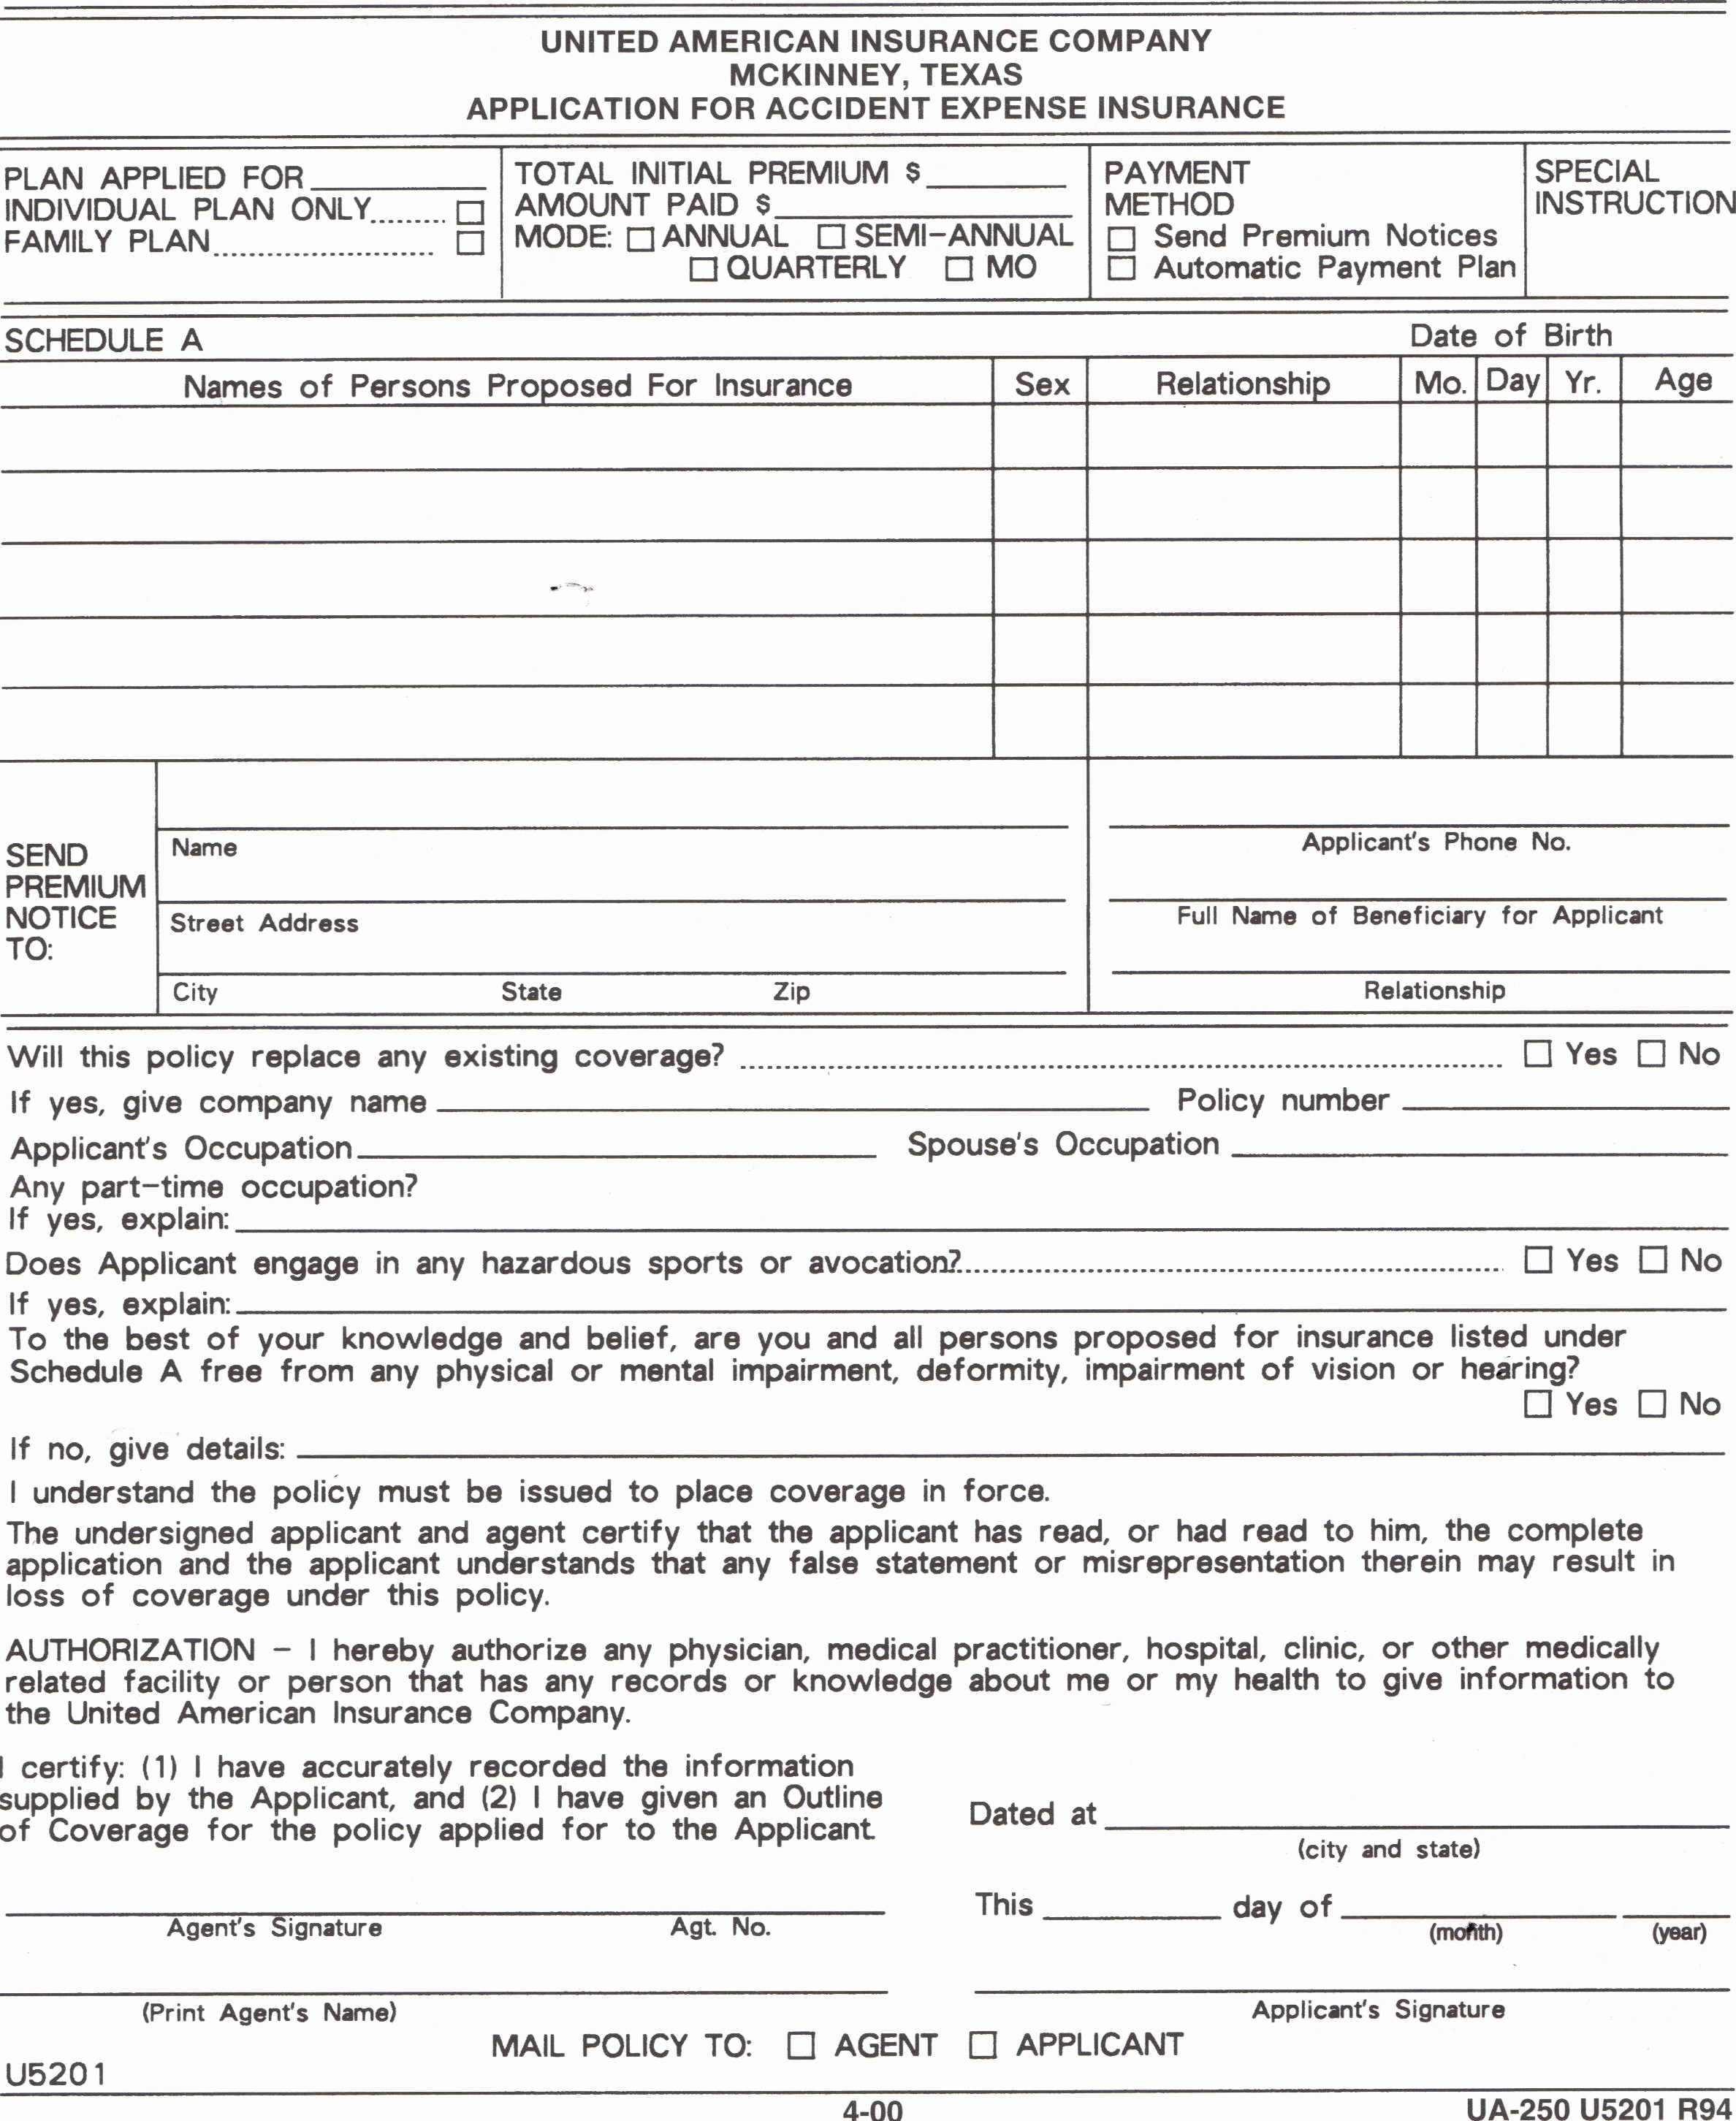 50 Fresh Home Insurance Application Form DOCUMENTS IDEAS Document